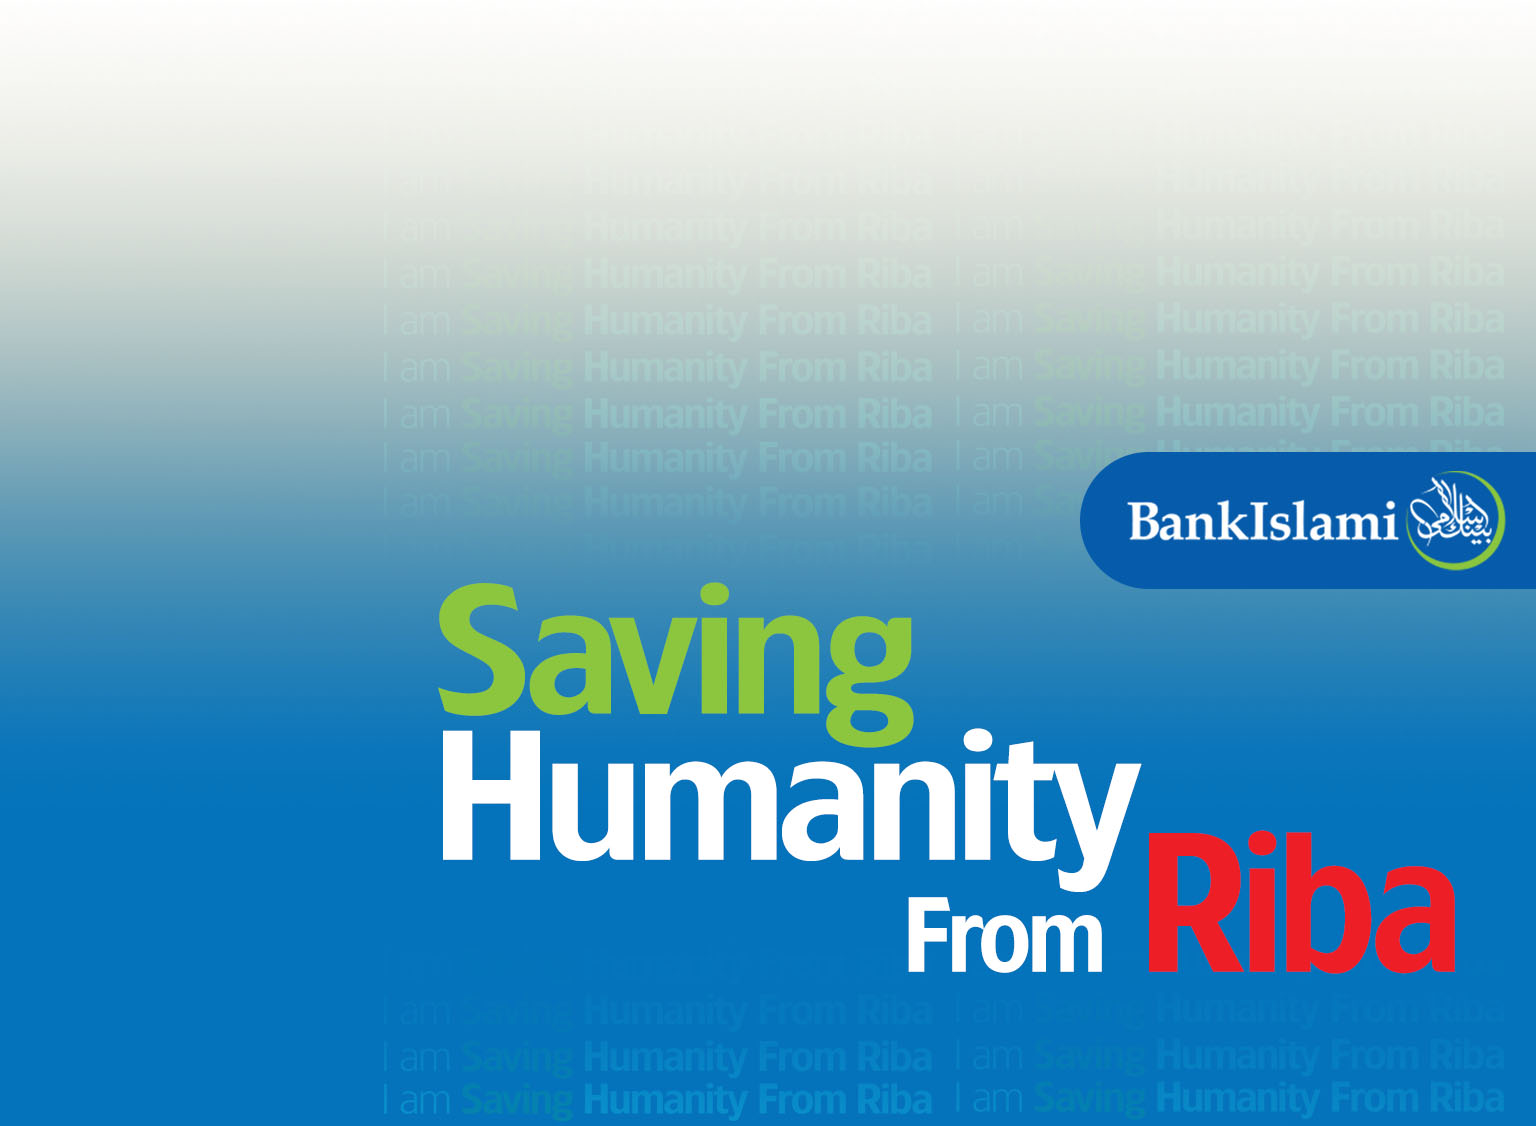 https://bankislami.com.pk/wp-content/uploads/2021/11/Saving-Humanity-from-Riba.jpg